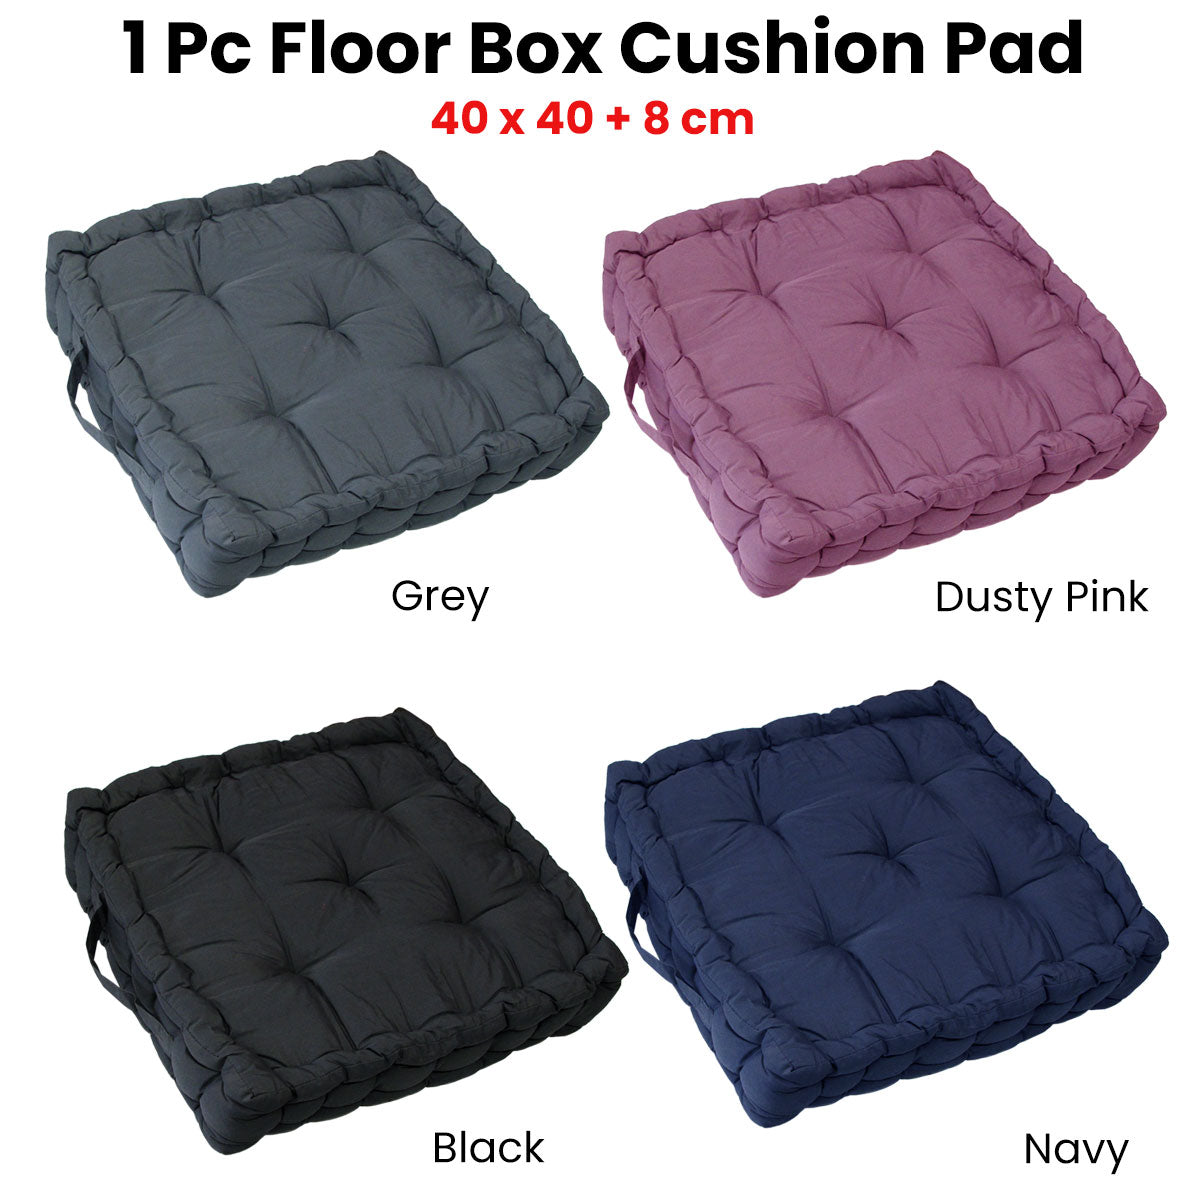 1 Pc Floor Box Cushion Pad 40 x 40+ 8 cm Black